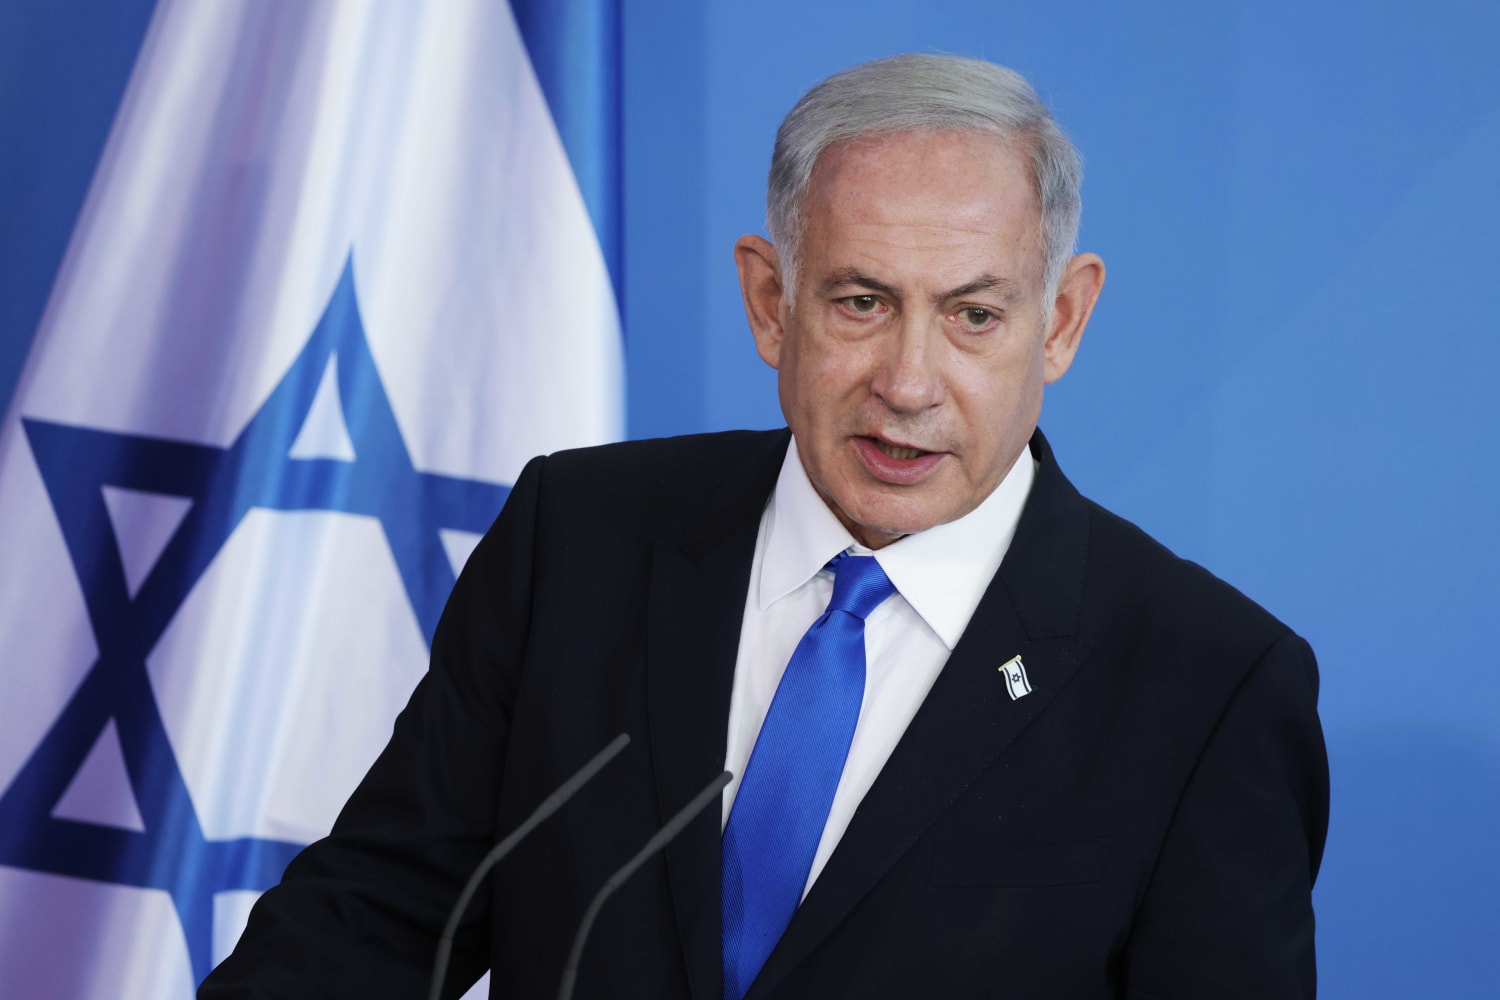 Netanyahu softens government’s judicial overhaul after Biden call